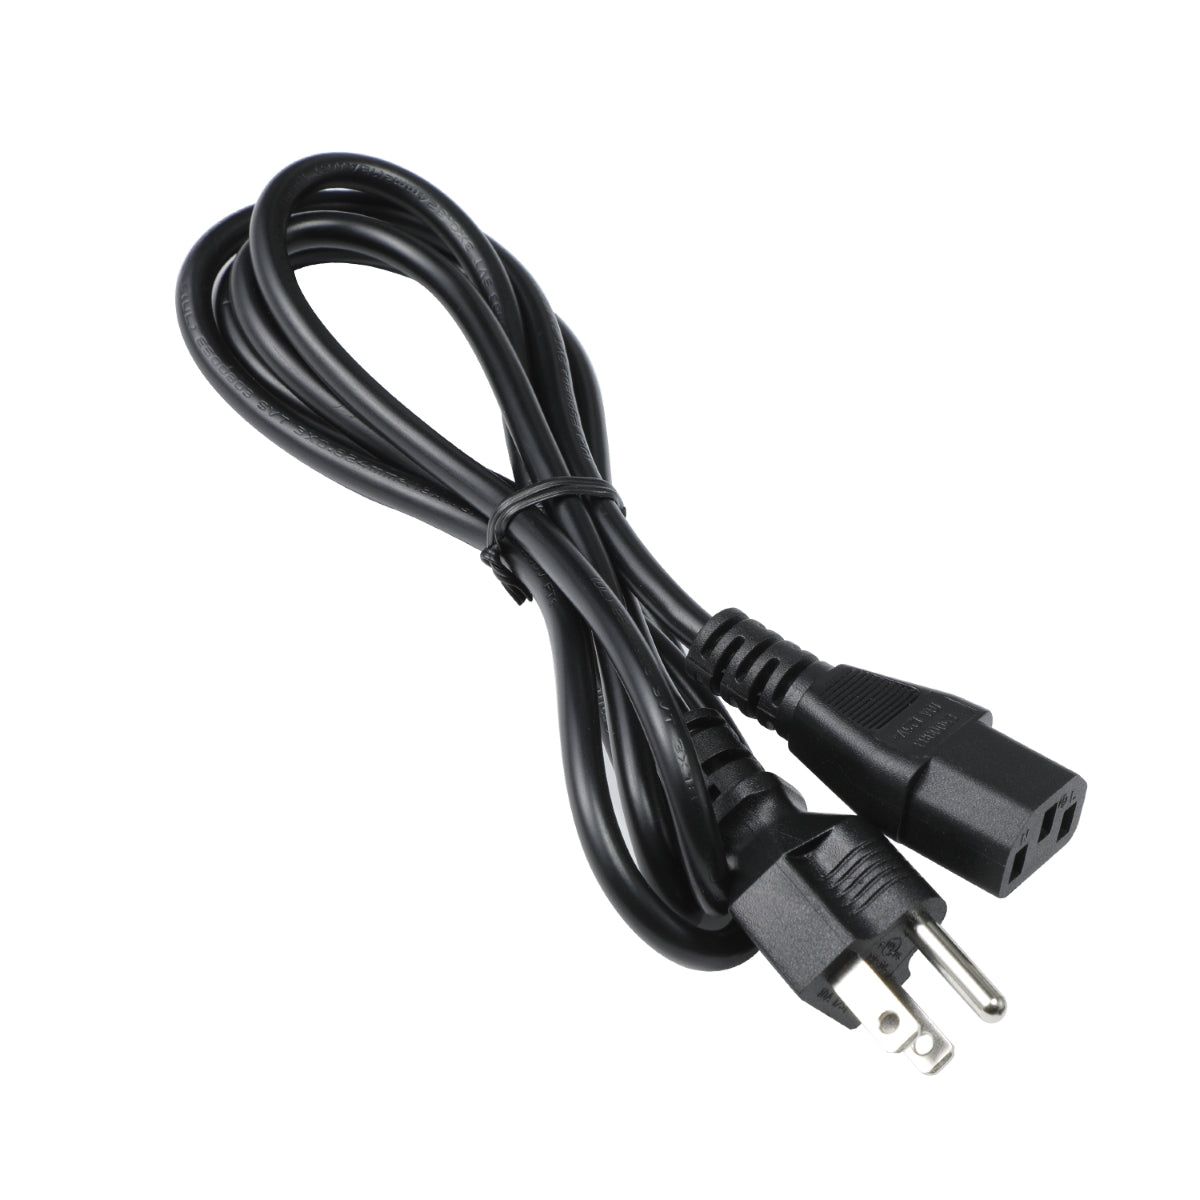 Power Cord for Dell Ultrasharp U2718Q Monitor